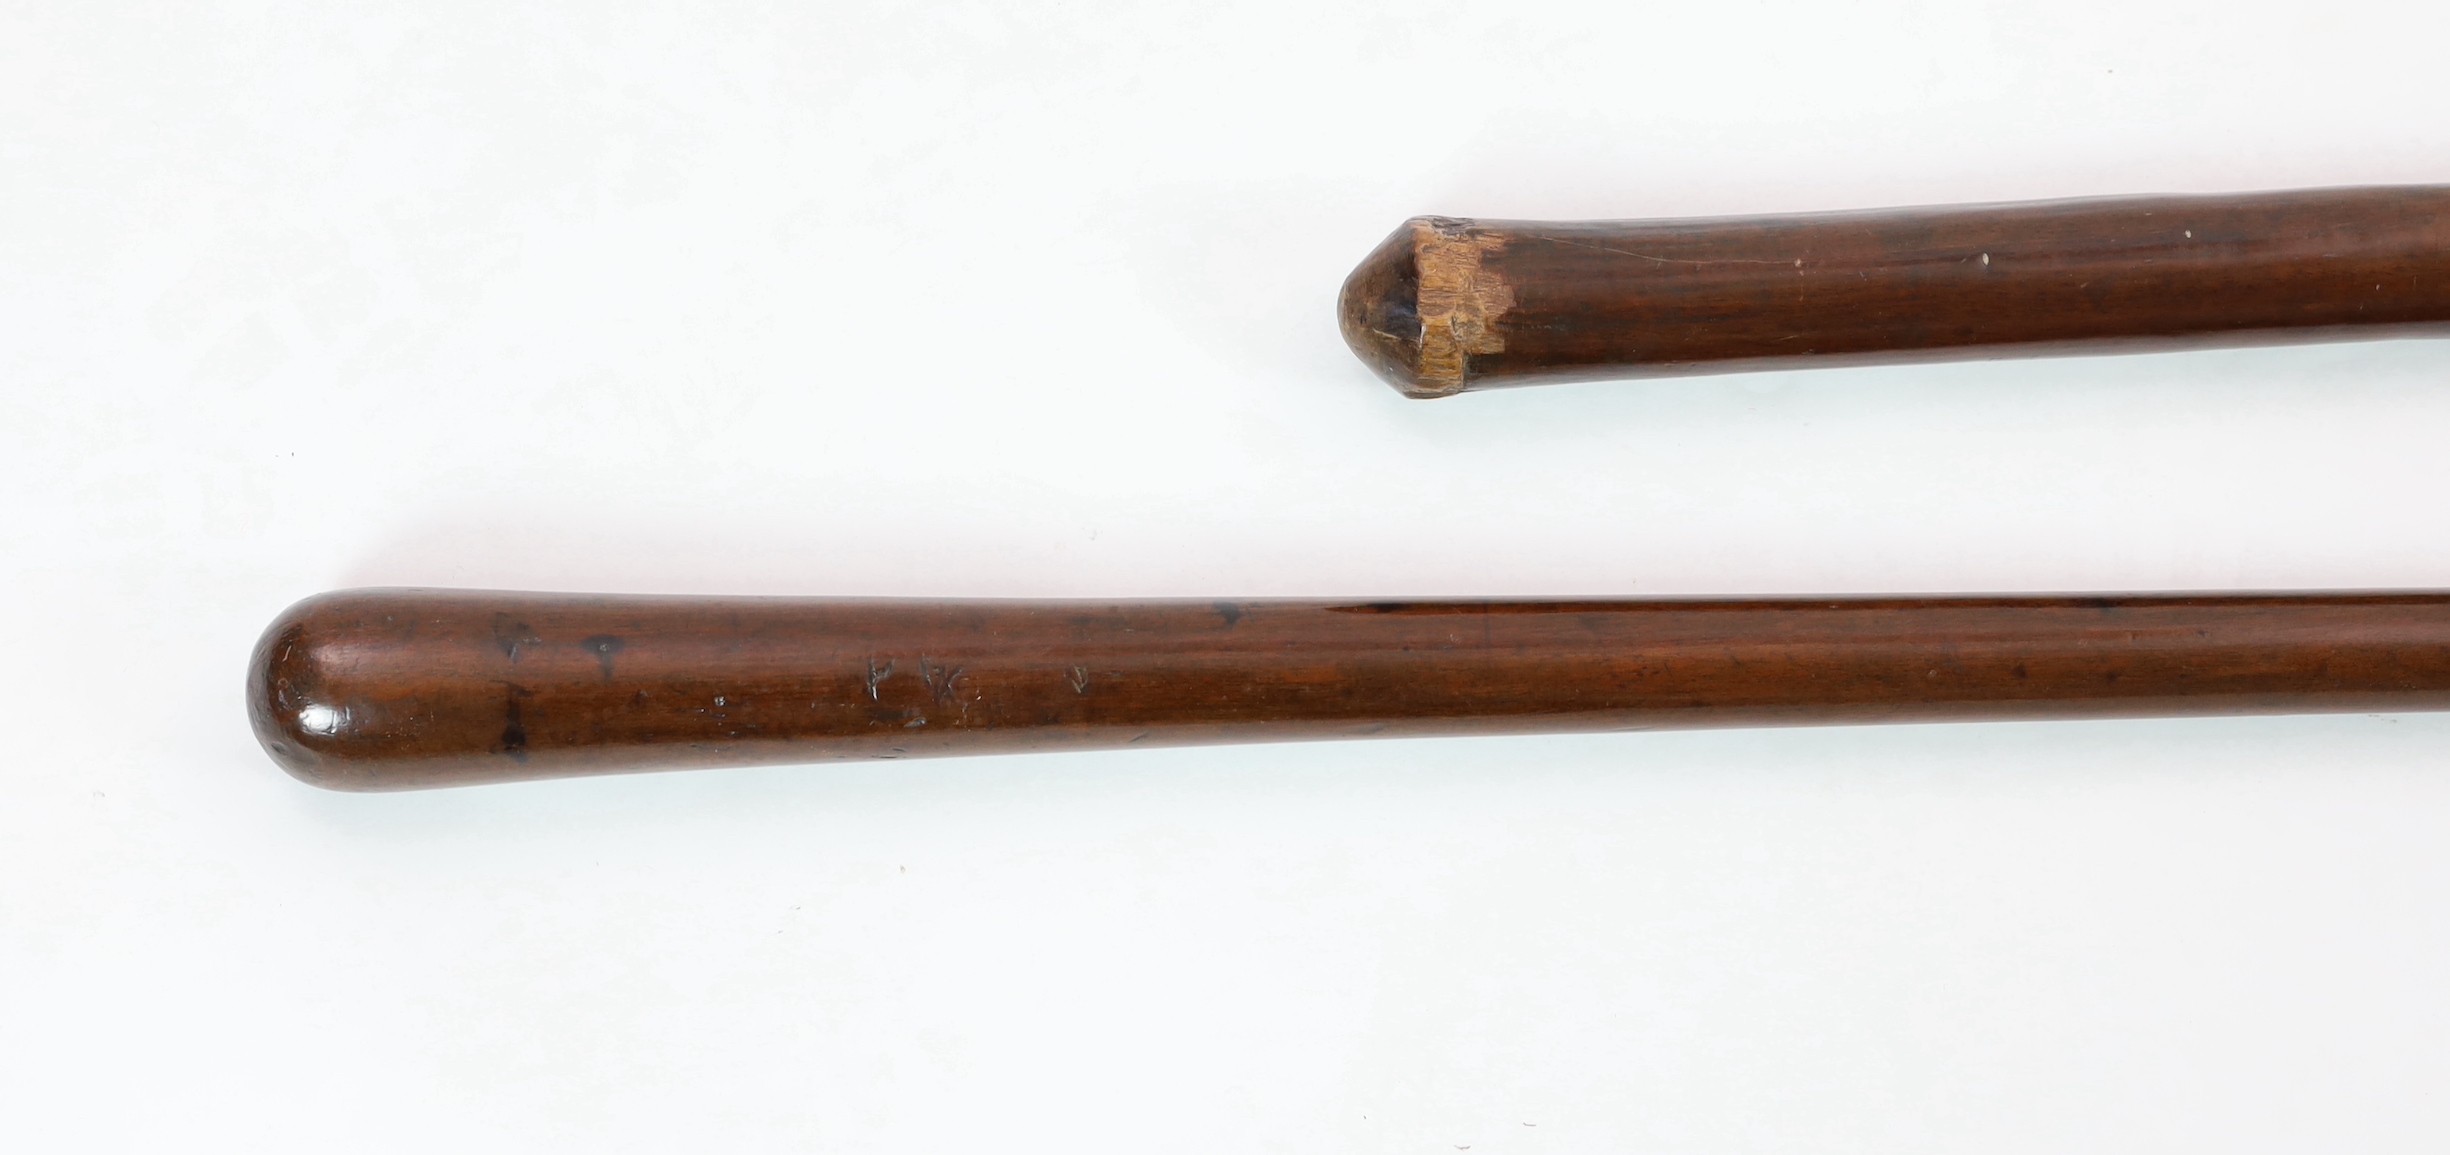 Two Tongan hardwood war clubs, 87cm and 96cm long